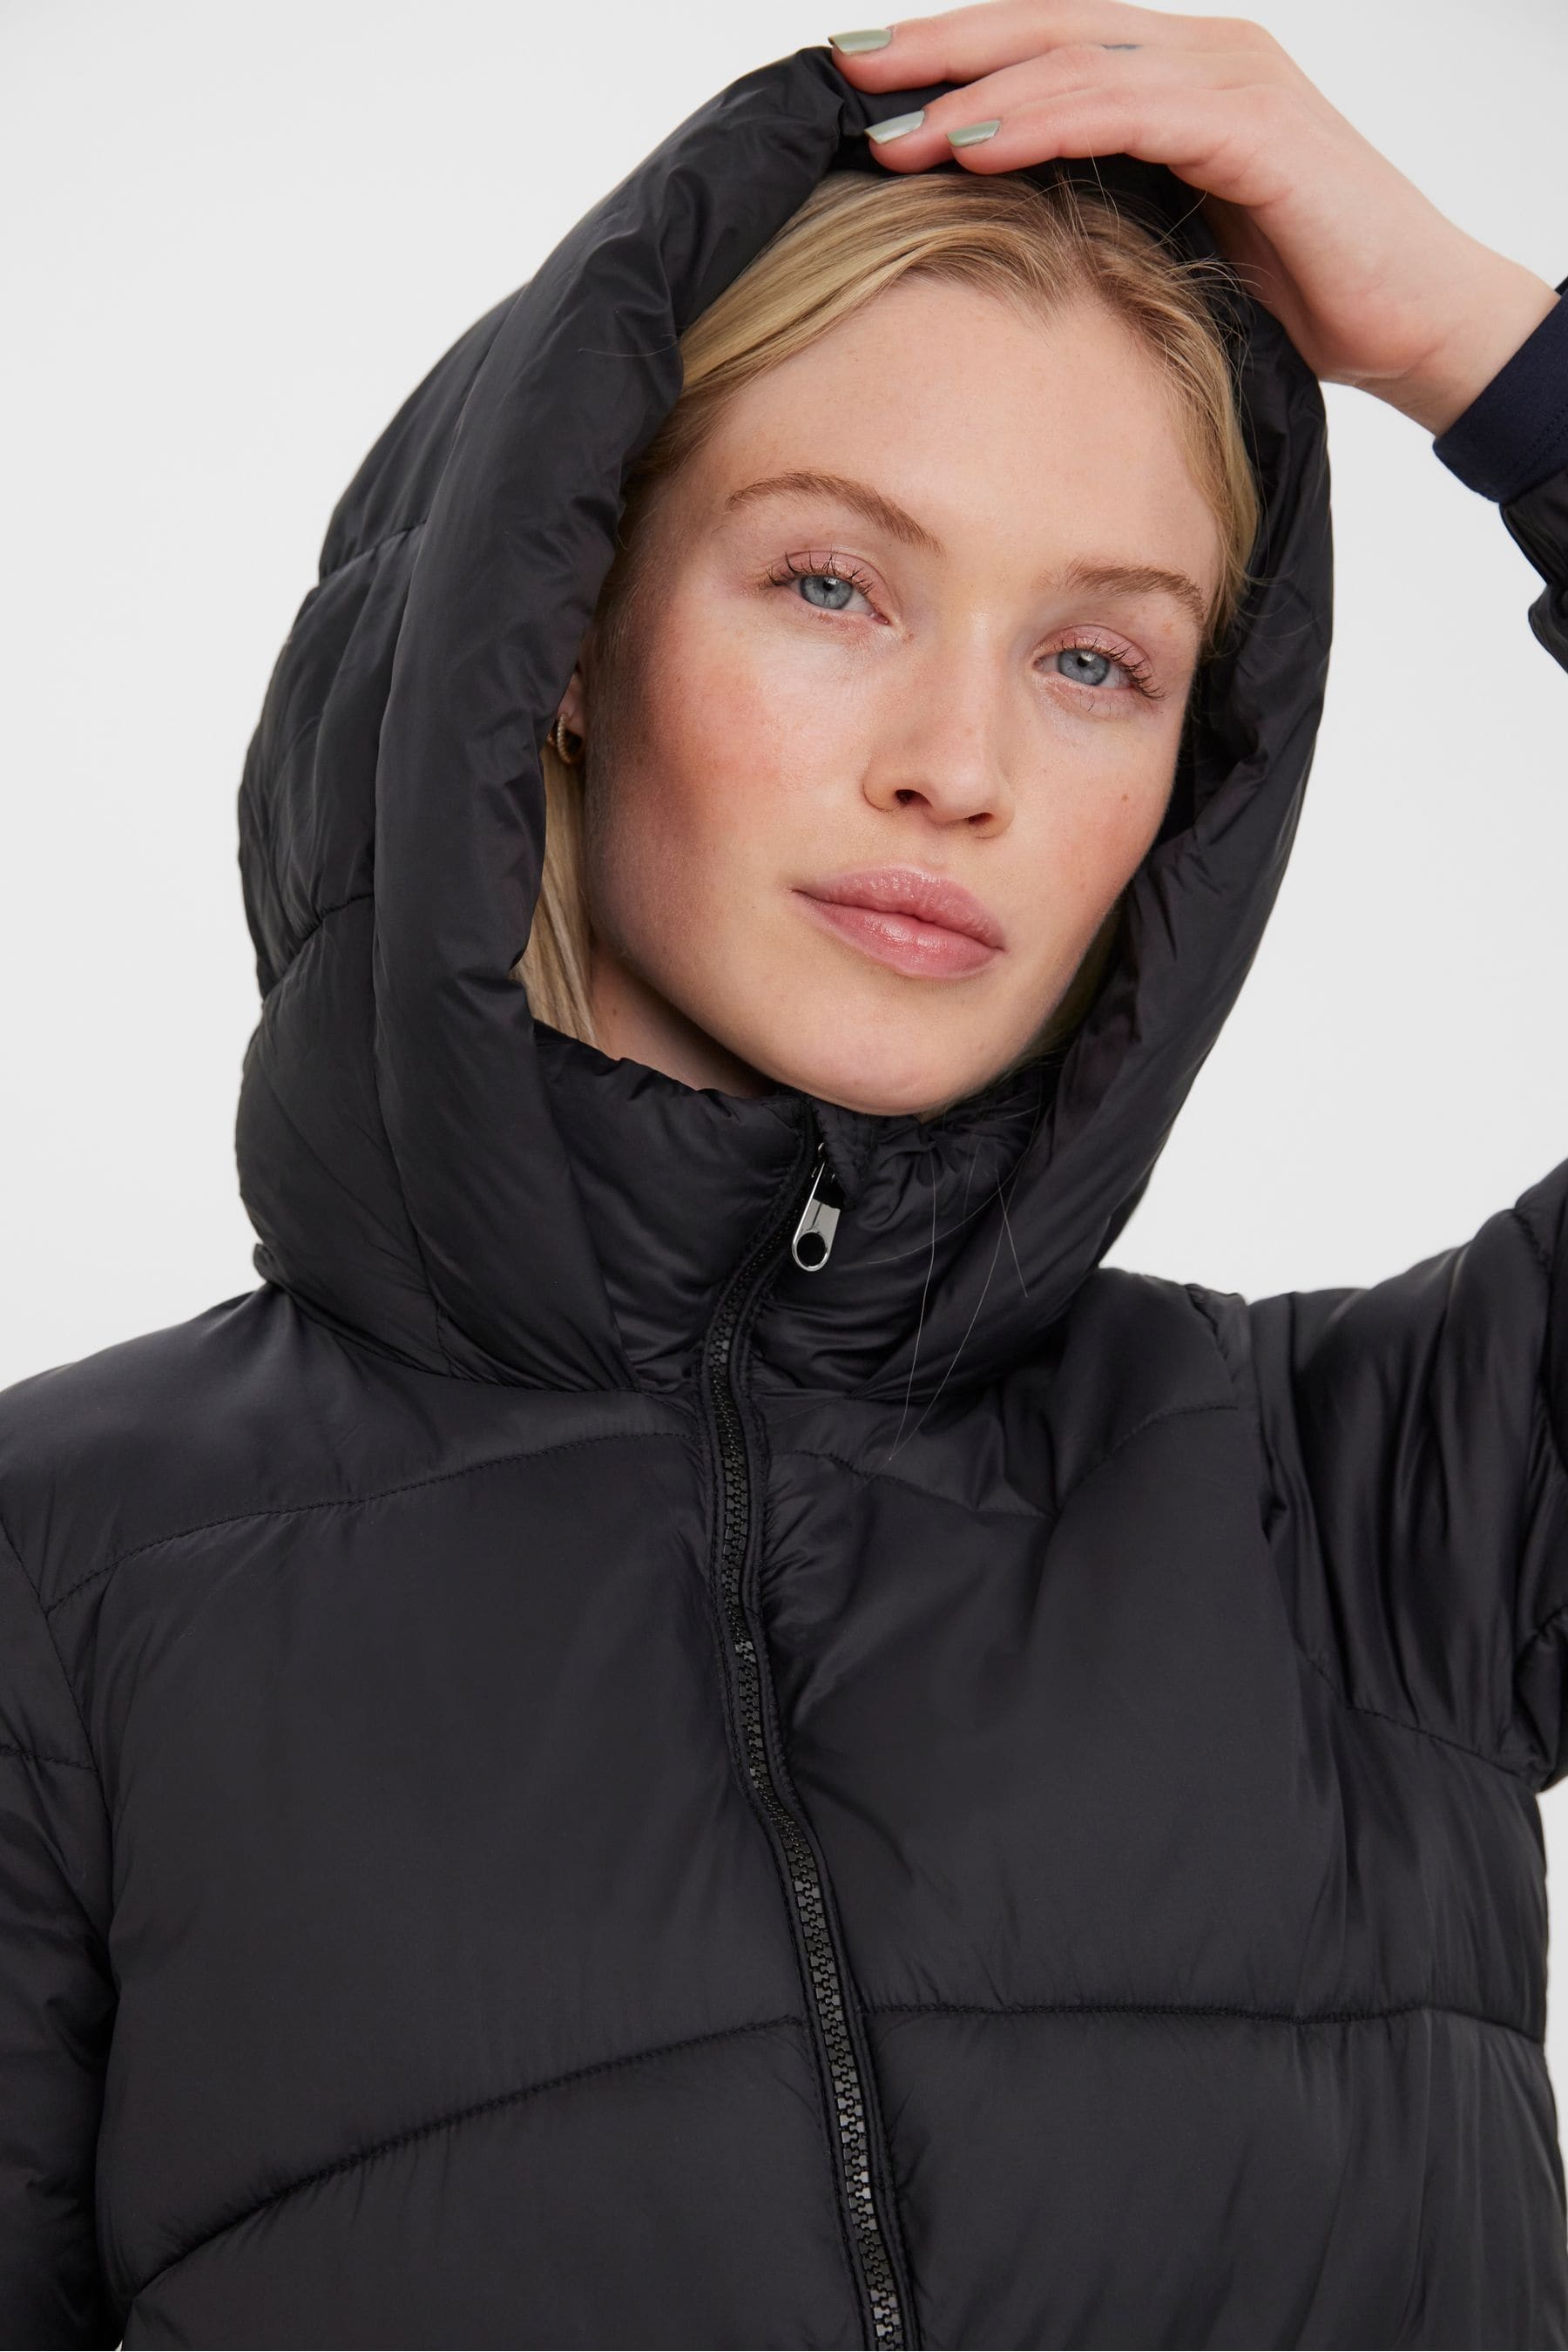 Buy VERO MODA Black Short Padded Hooded Jacket from the Next UK online shop